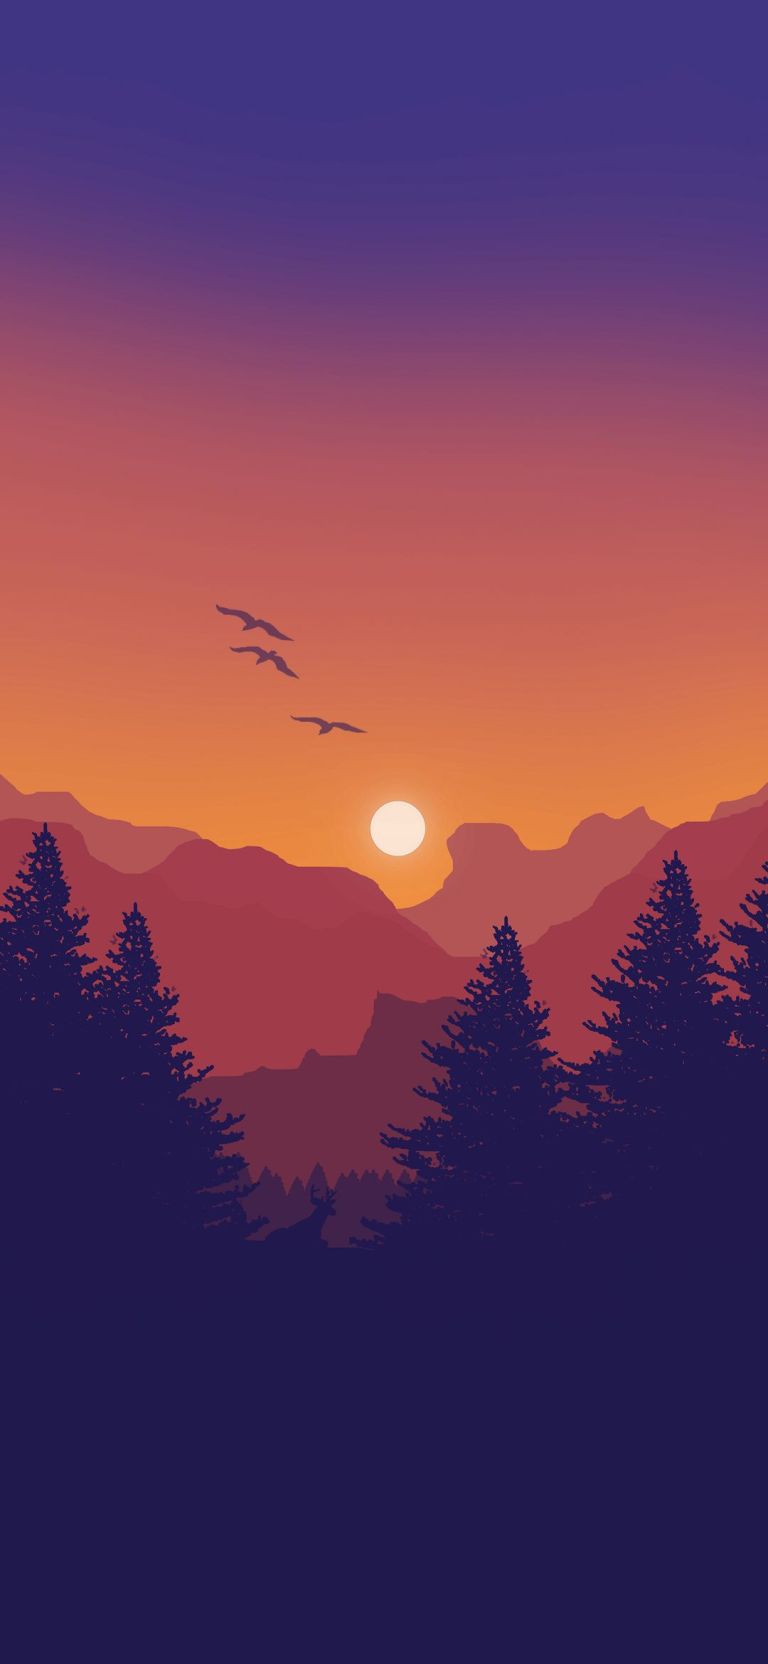 Nature Mountain Landscape 4K iPhone Wallpaper Download Free